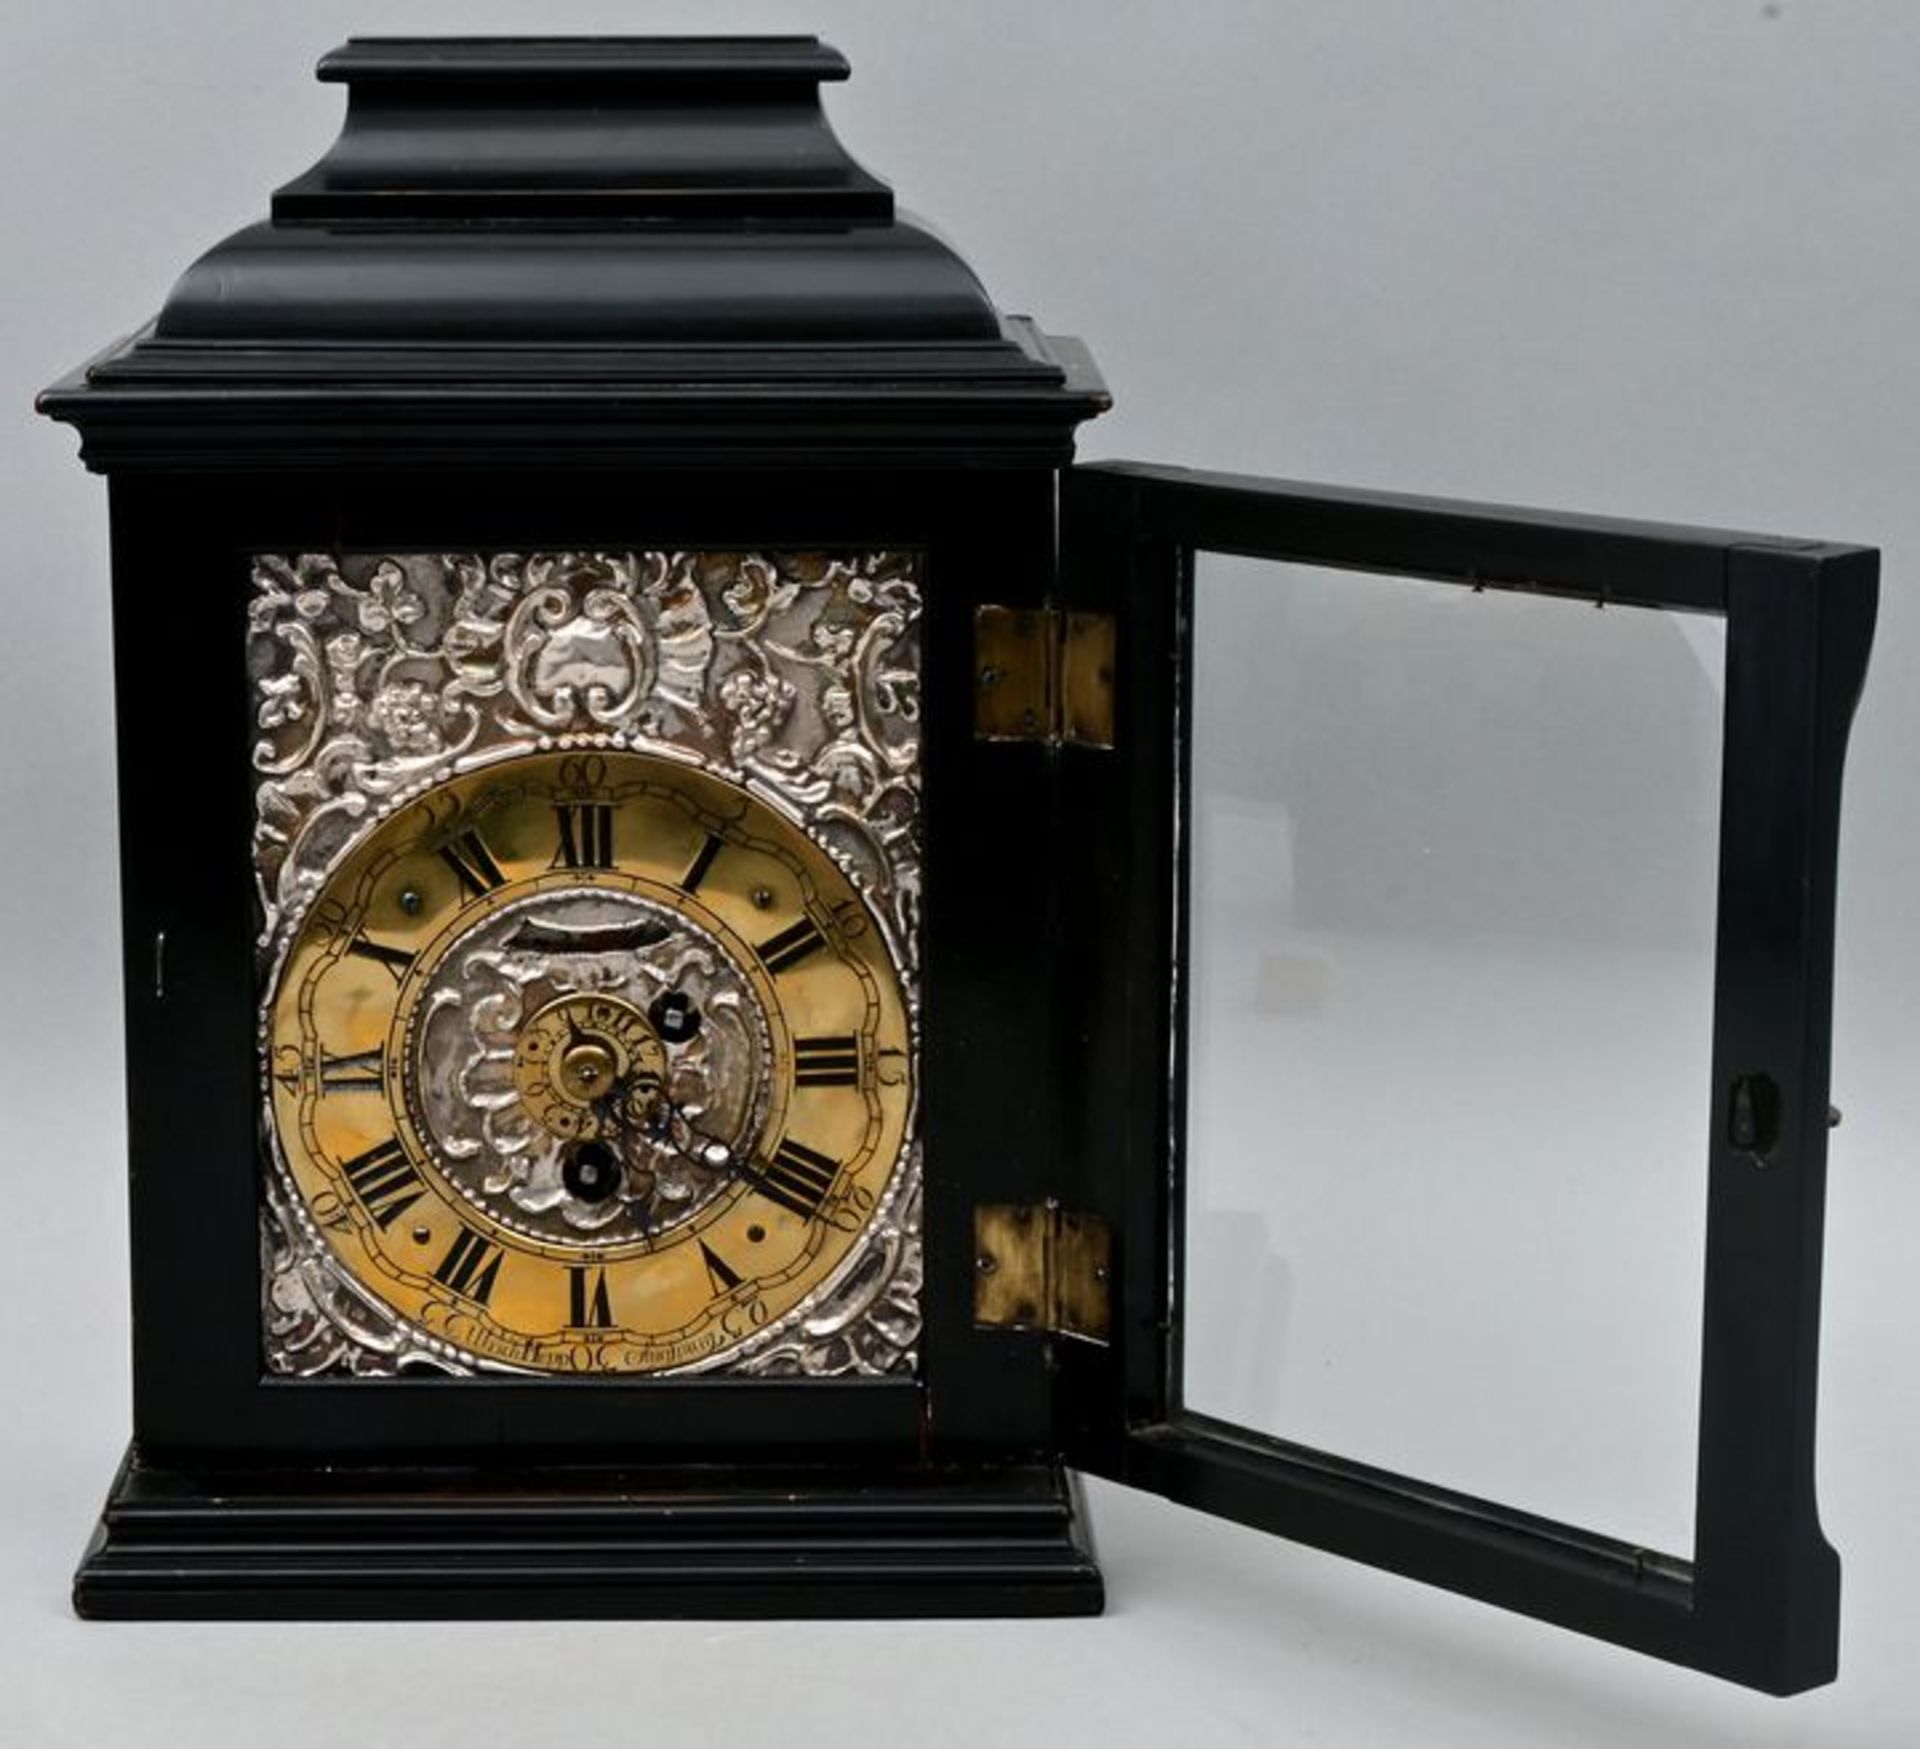 Stockuhr, U. Hepp Augs. / Bracket clock - Image 5 of 7